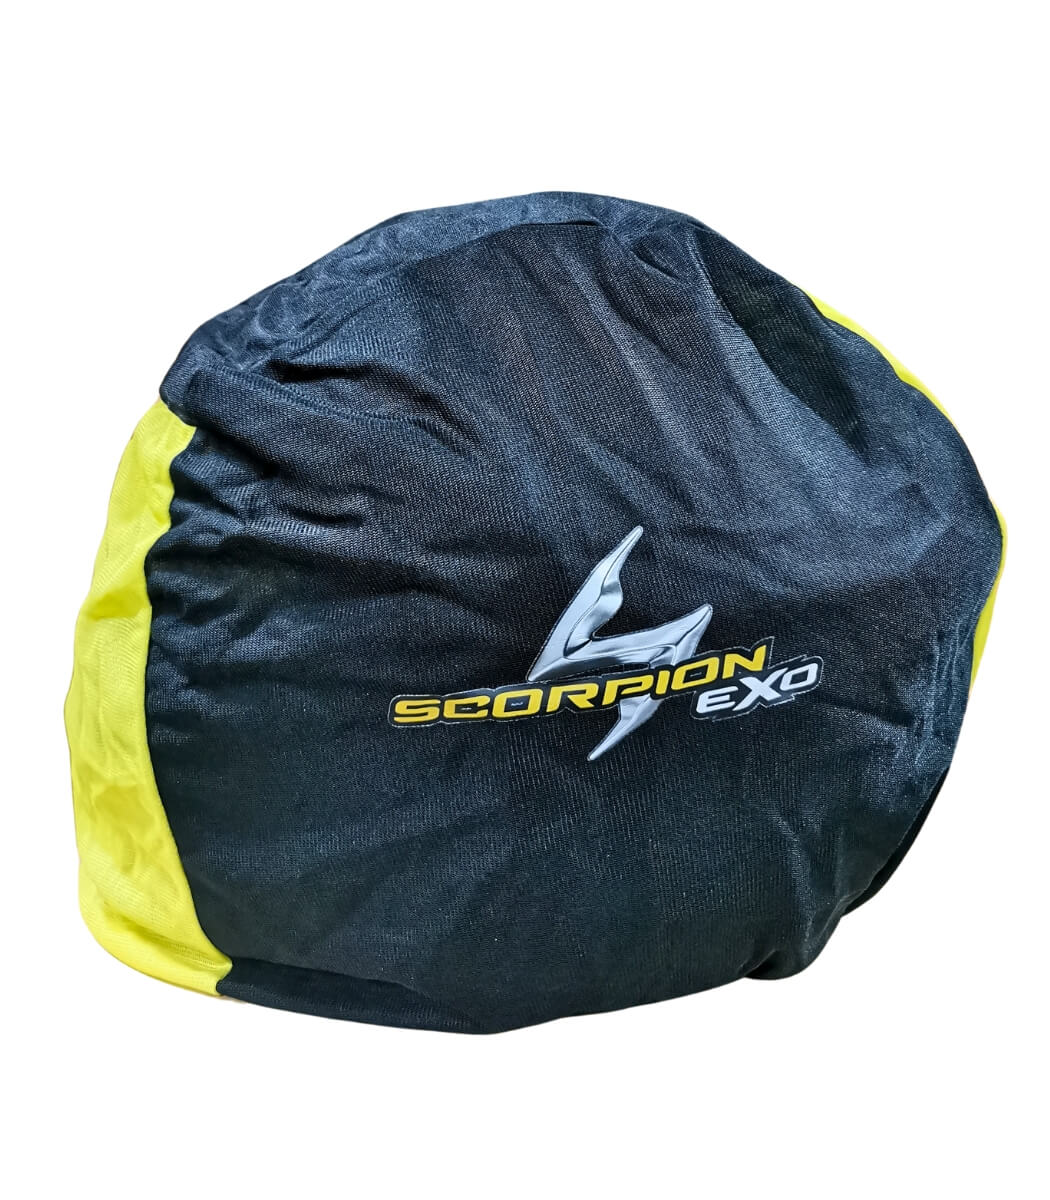 Scorpion Helmet bag